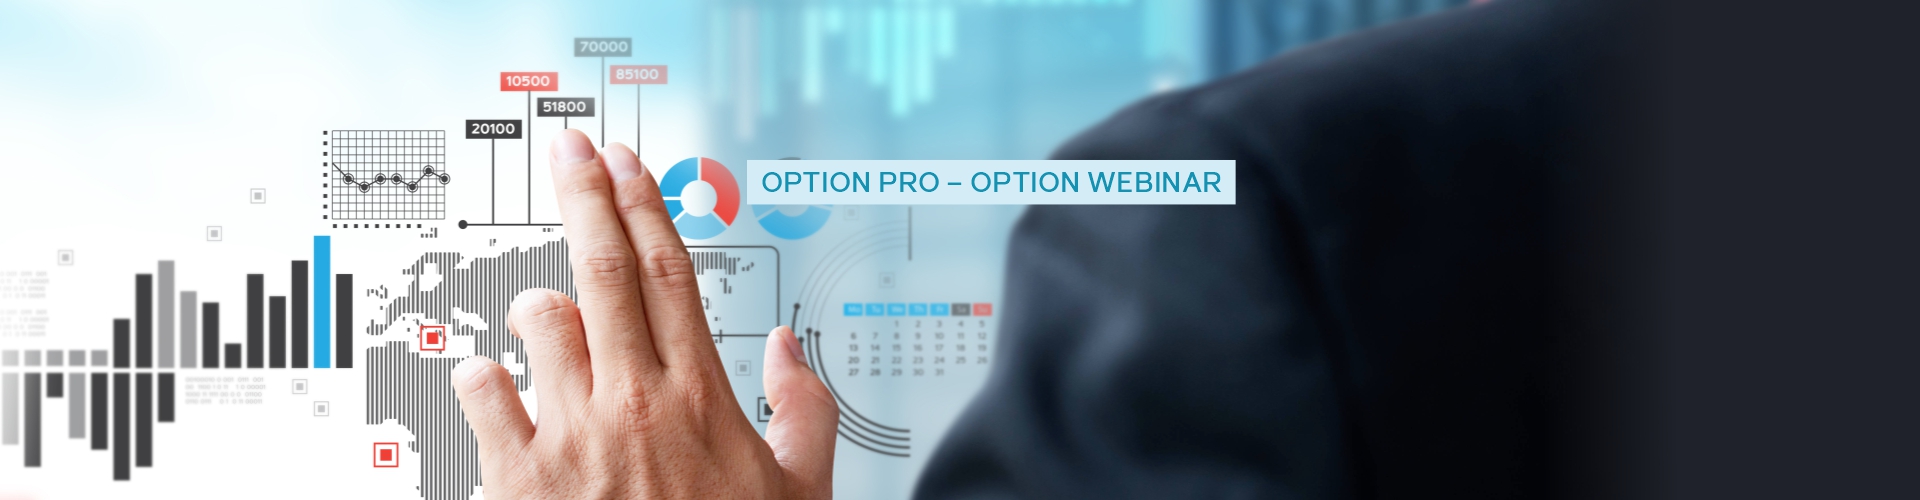 Option Pro – Option Webinar